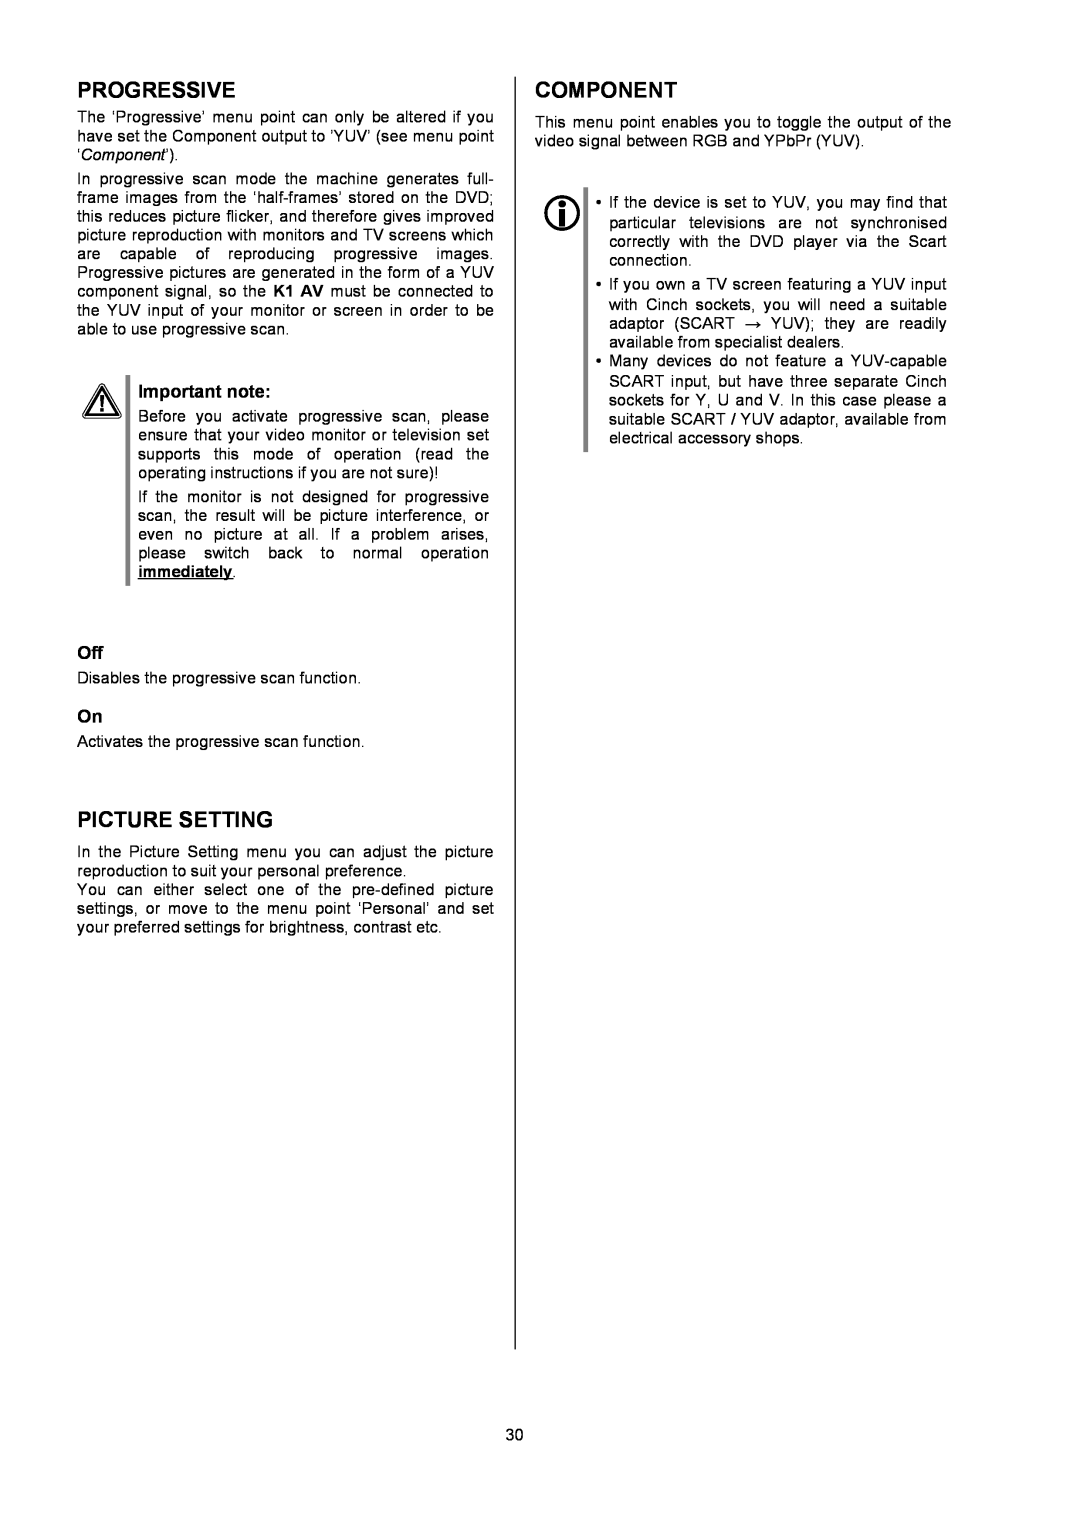 T+A Elektroakustik K1 AV user manual Progressive, Picture Setting, Component, Important note 